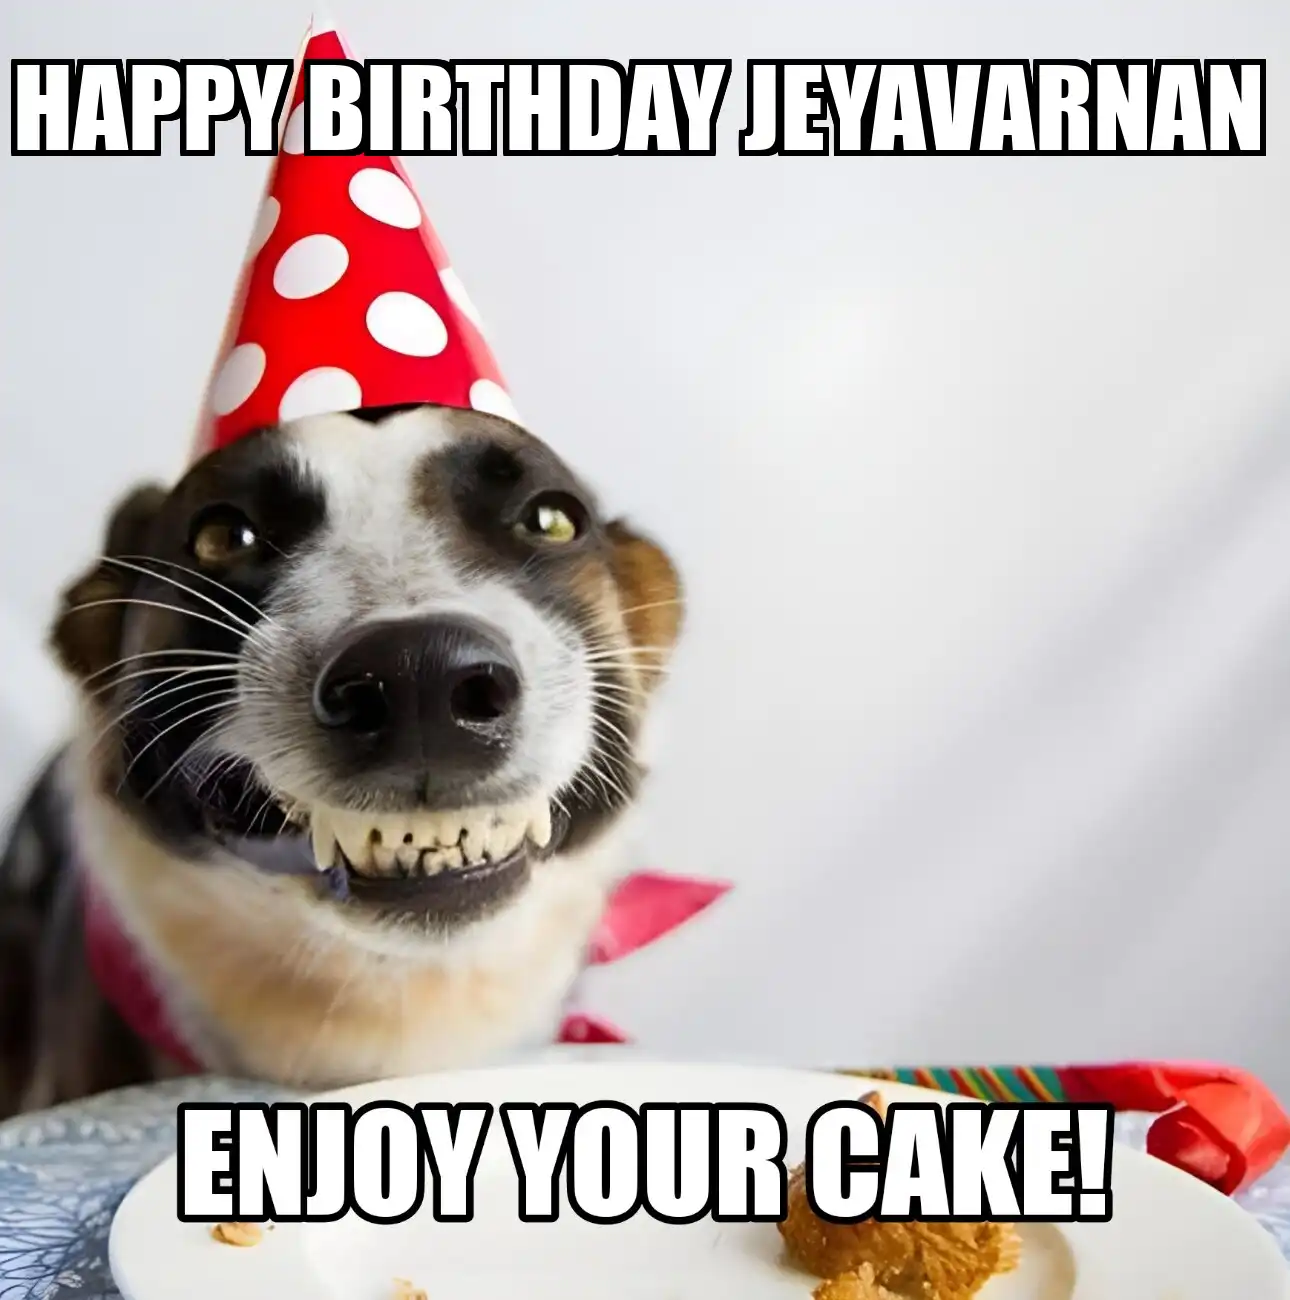 Happy Birthday Jeyavarnan Enjoy Your Cake Dog Meme